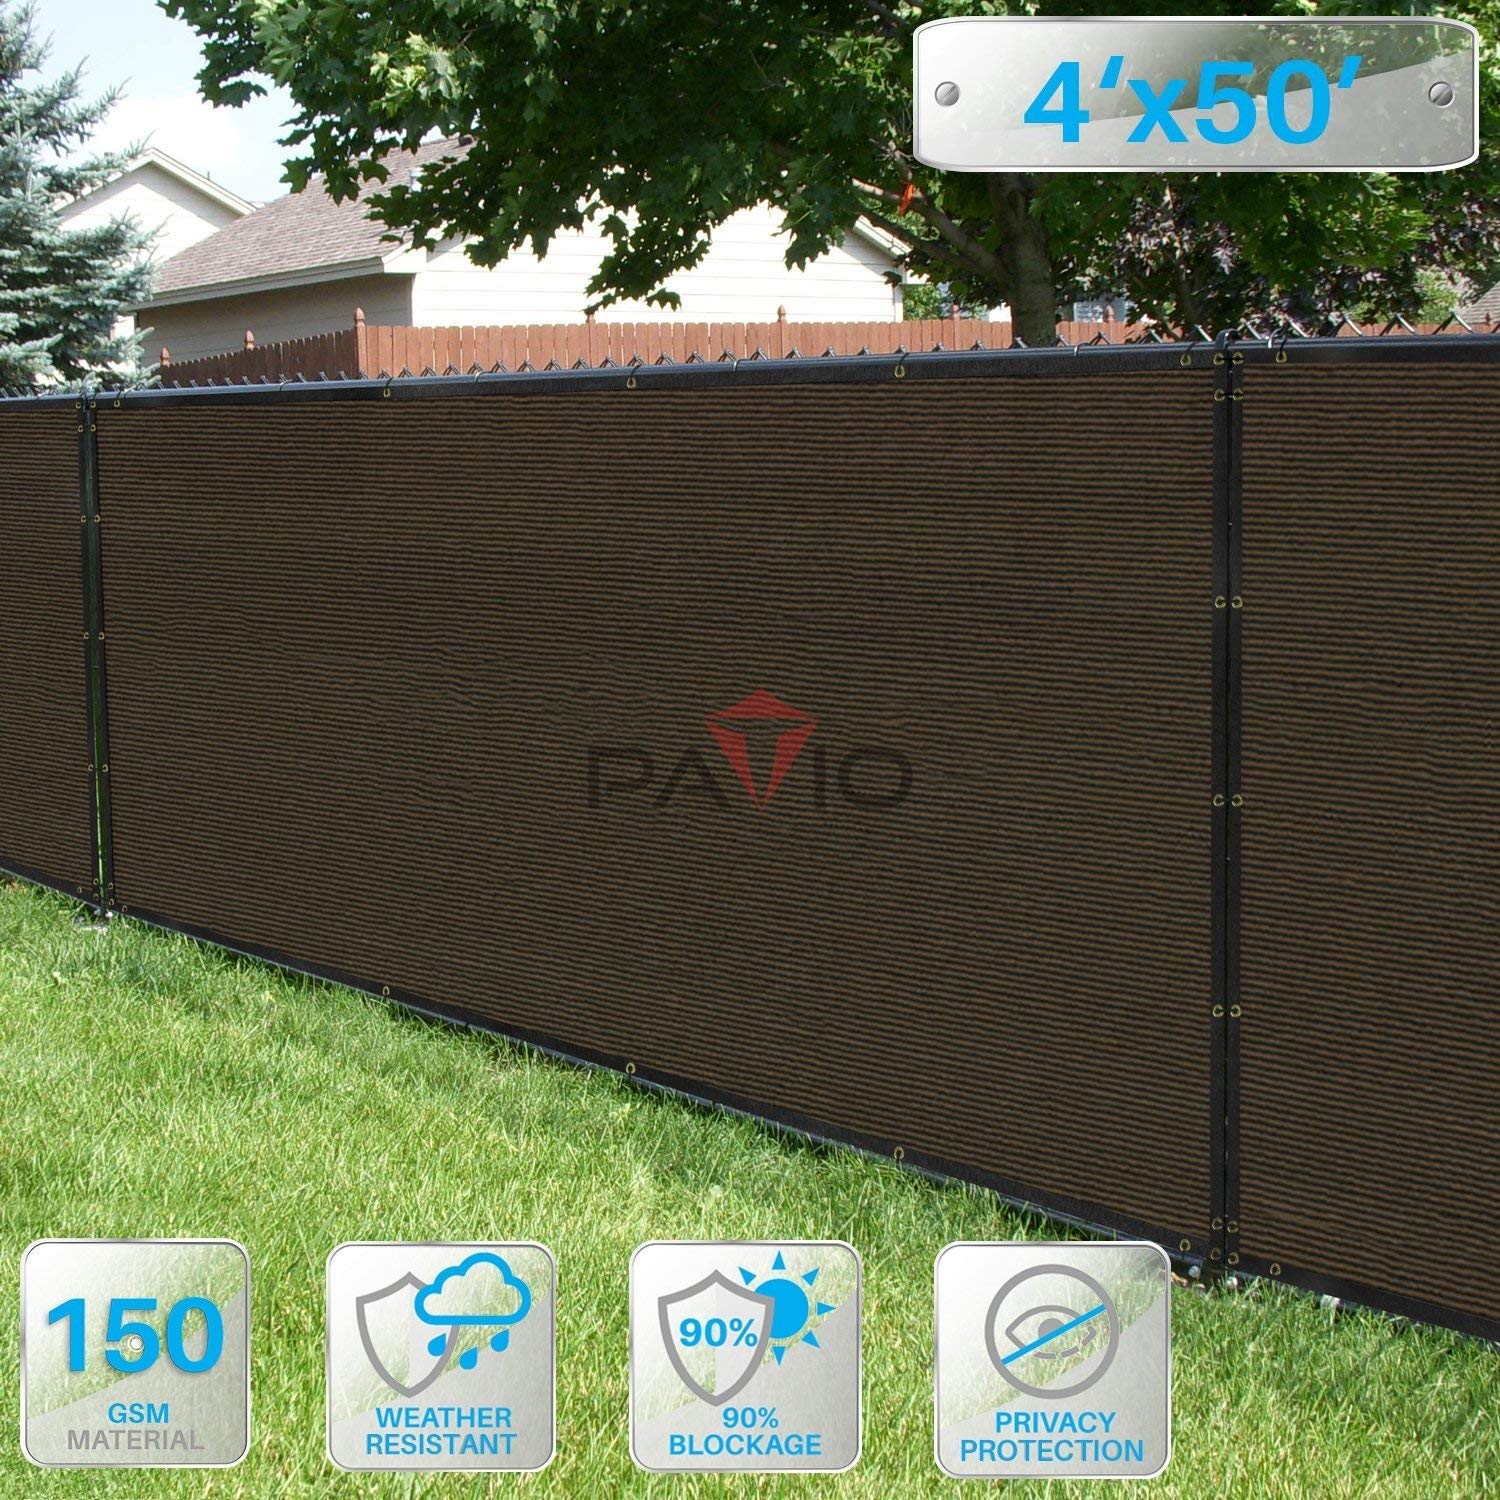 Patio Paradise Logo - Amazon.com : Patio Paradise 4' x 50' Brown Fence Privacy Screen ...